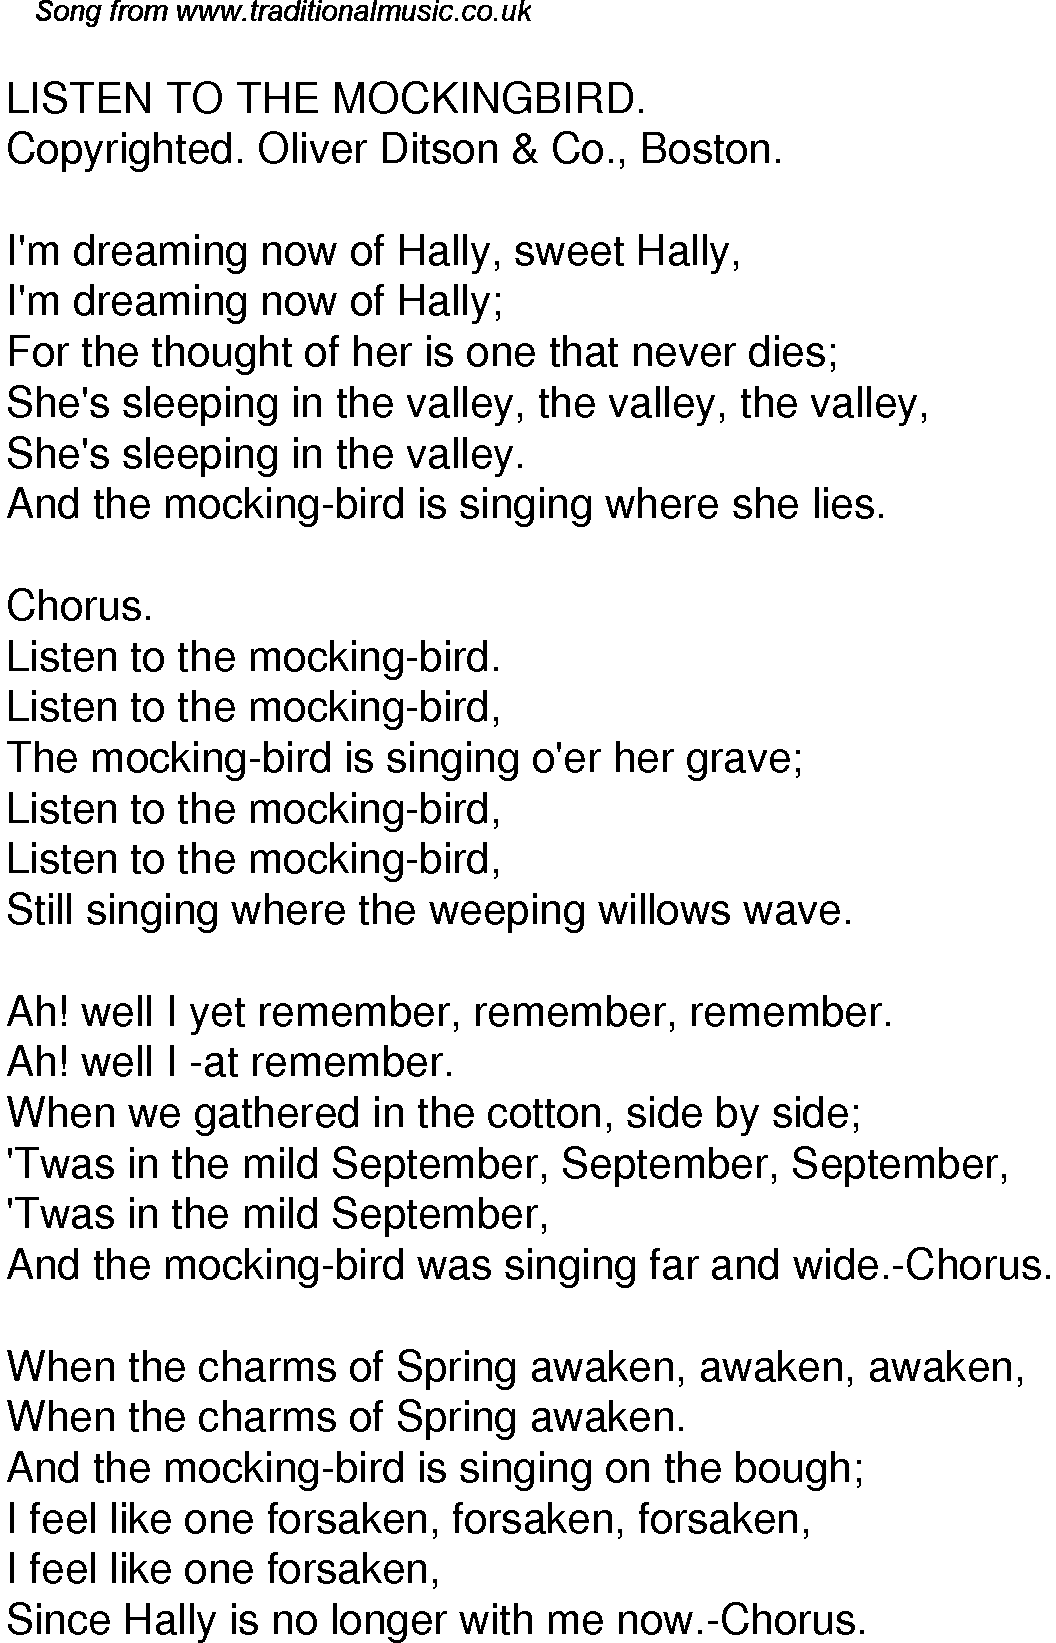 Eminem: Mockingbird (lyrics) 